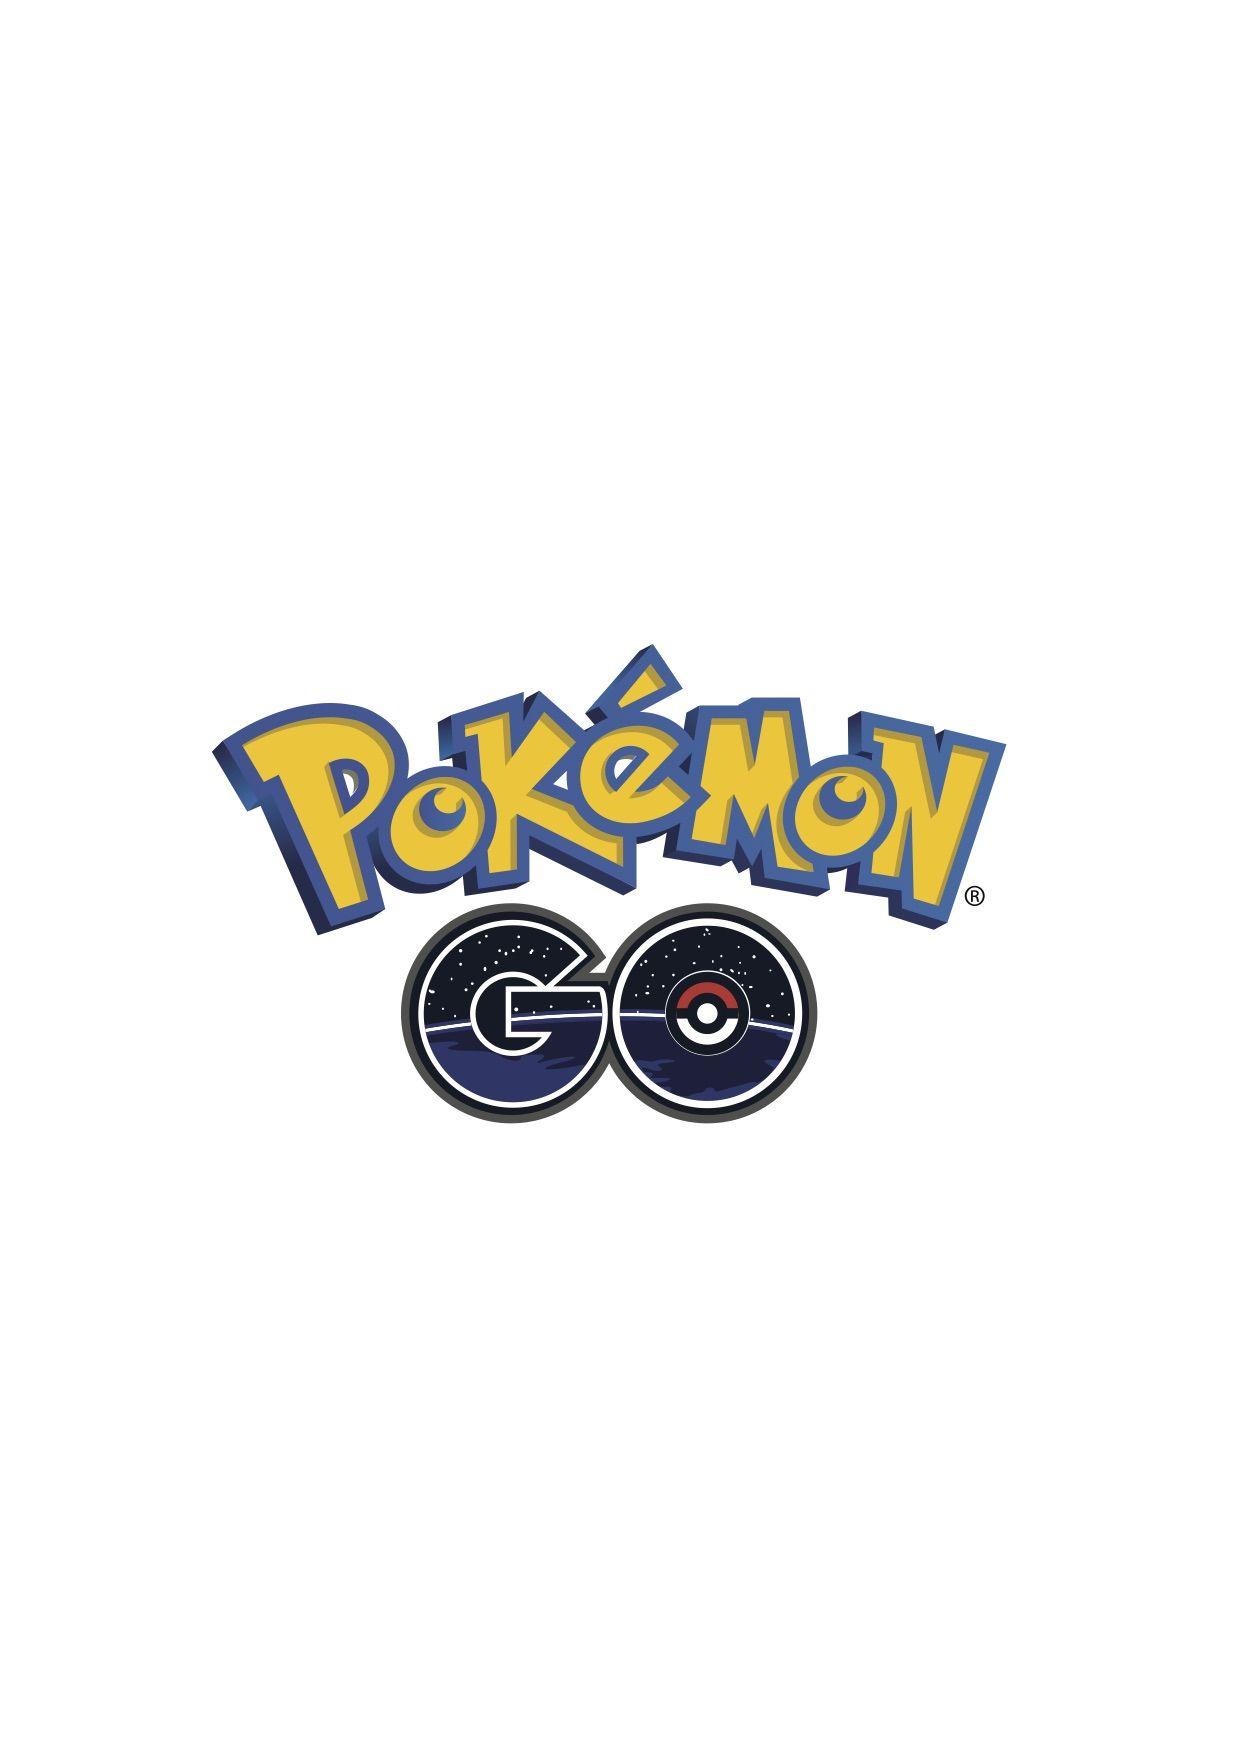 Can I Use Pokemon Go Logo - Pokemon-Go-logo - SpeakerBox PR